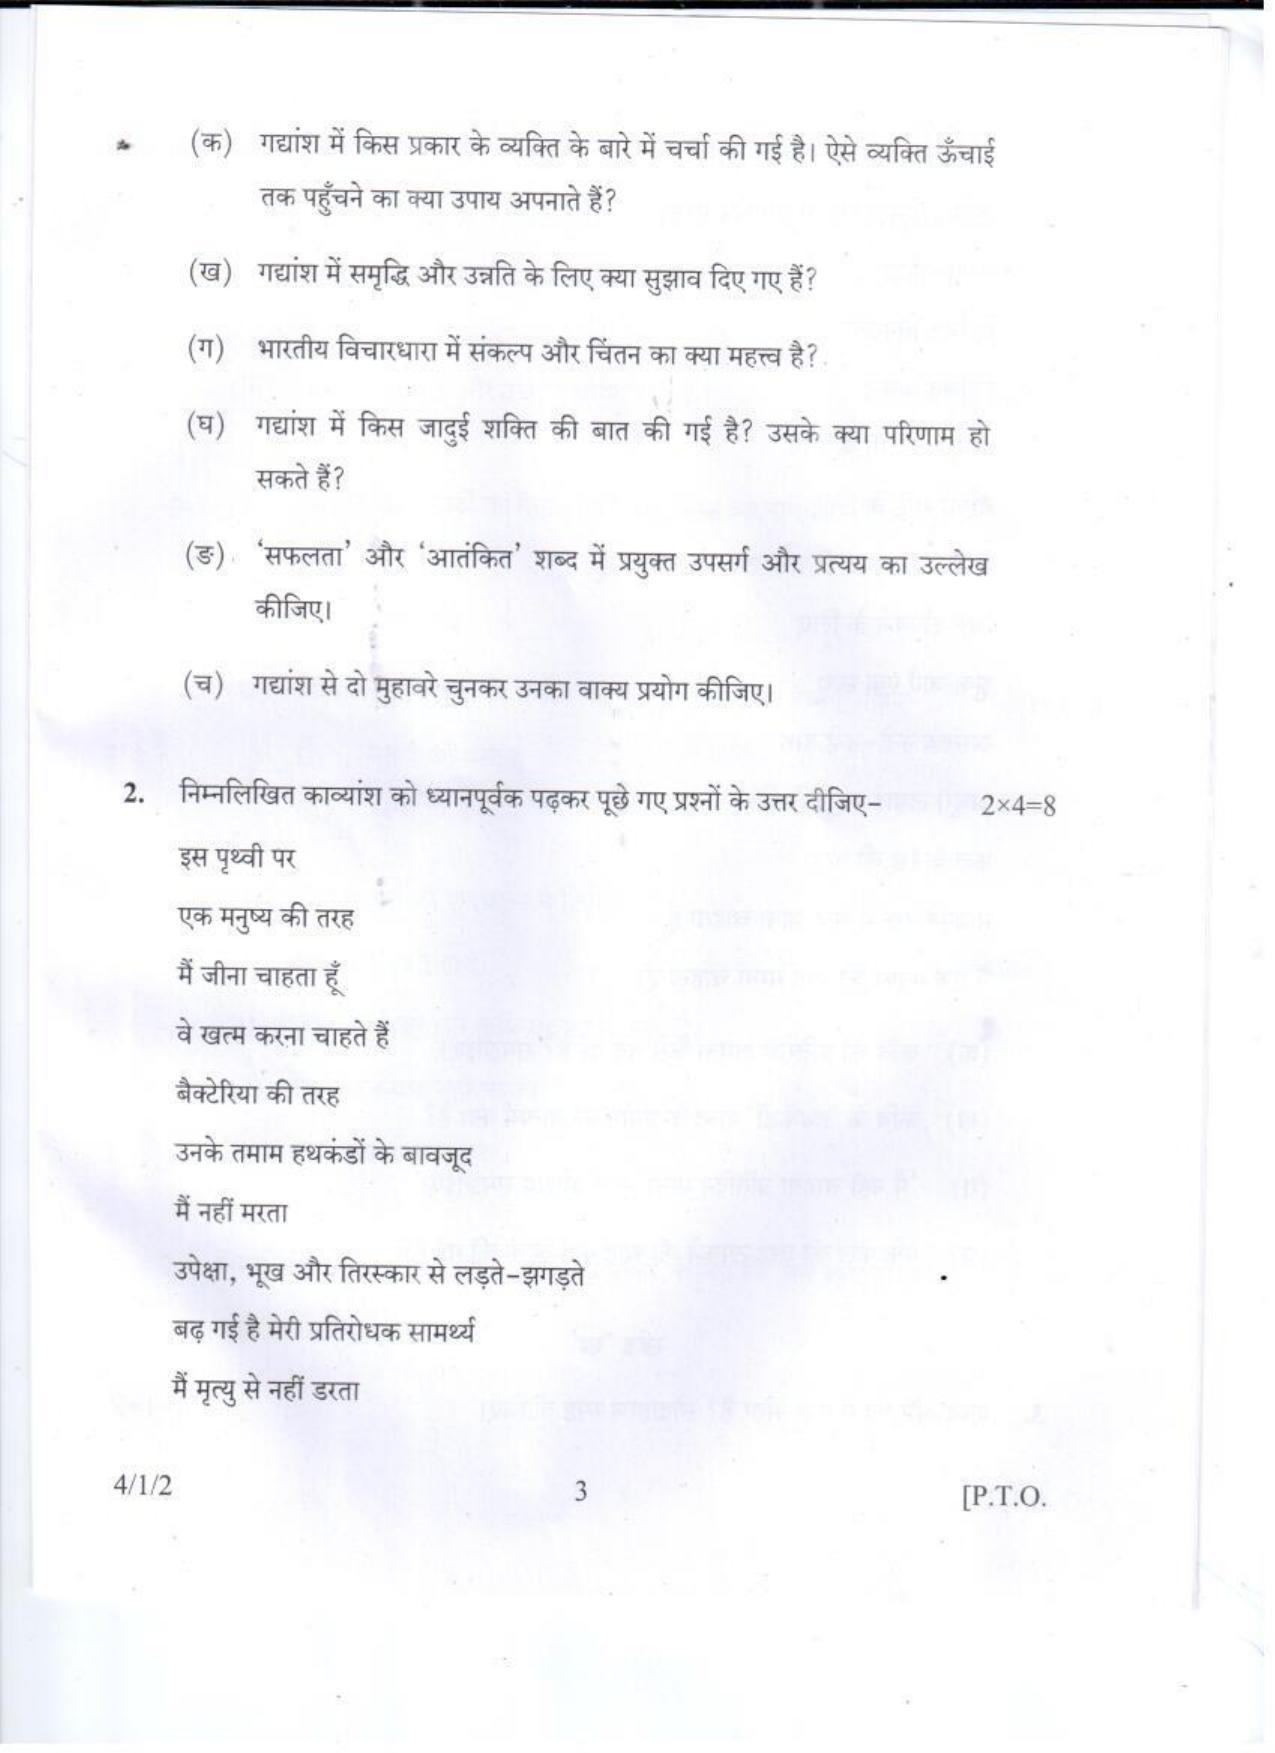 CBSE Class 10 Hindi HRK Set-2-Delhi-10 2017 Question Paper - Page 3